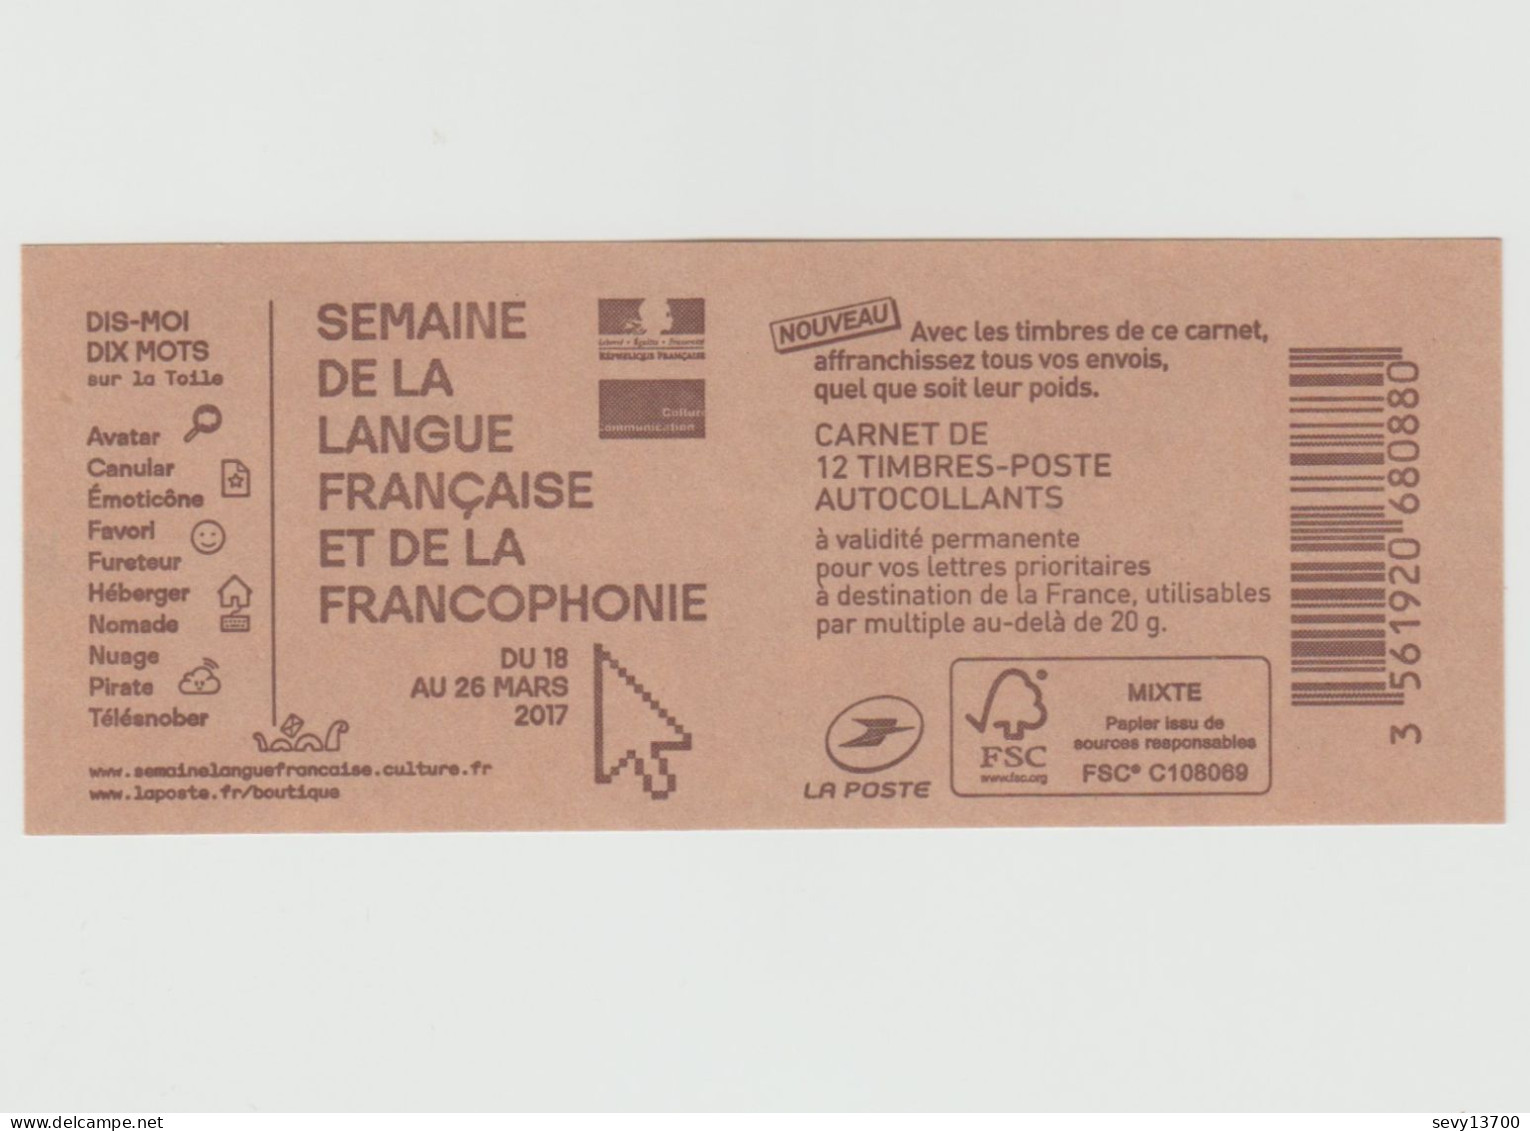 France 2017 Marianne Ciappa Kawena Carnet 12 Timbres Lettre Prioritaire Semaine De La Langue Française Et Francophonie - 2013-2018 Marianne (Ciappa-Kawena)